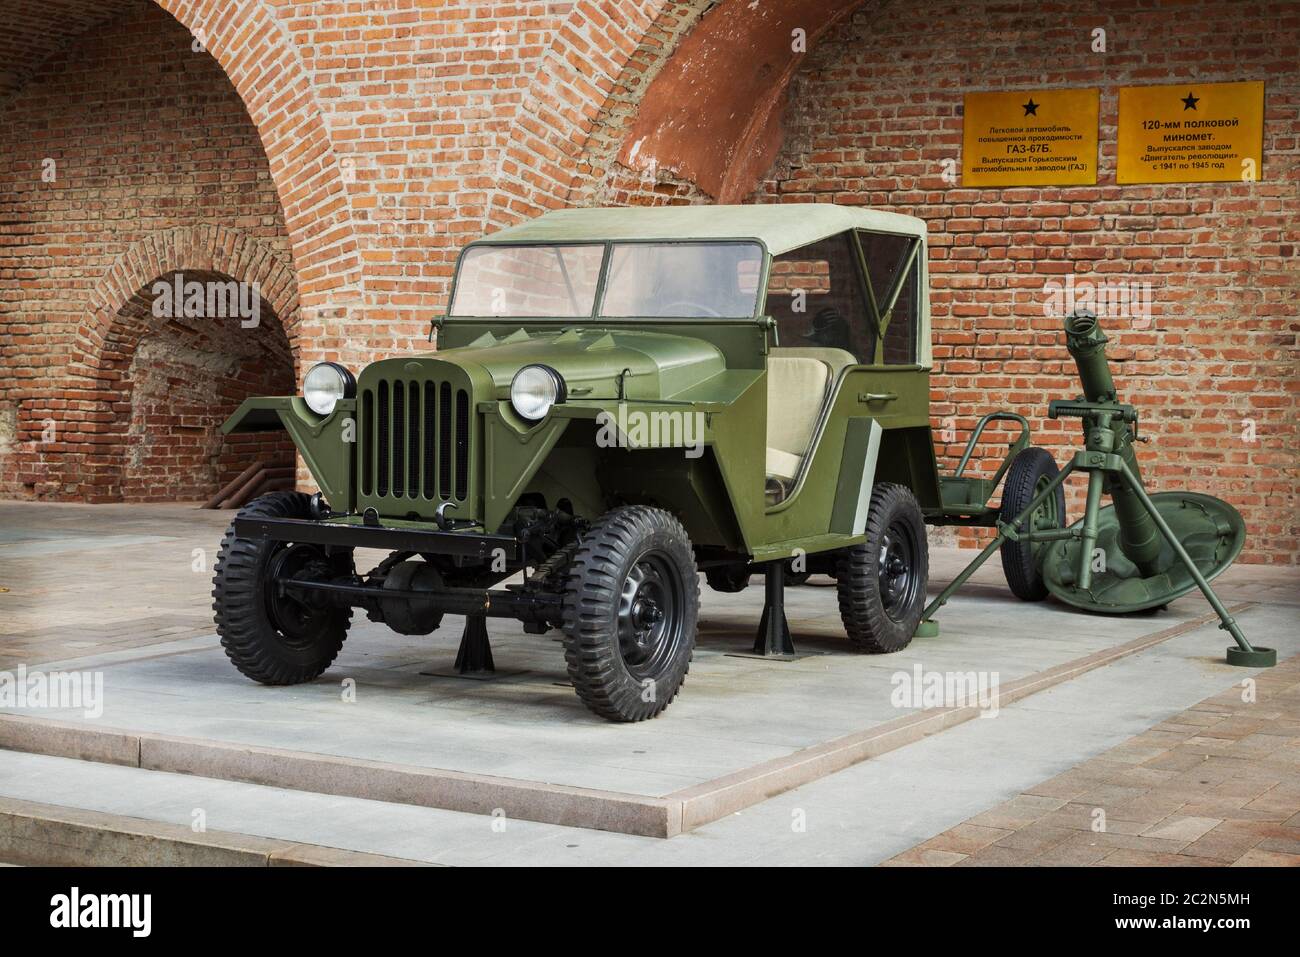 RUSSIA, NIZHNY NOVGOROD - AUG 06, 2014:Passenger road vehicle GAZ-67B during the Second World War Stock Photo